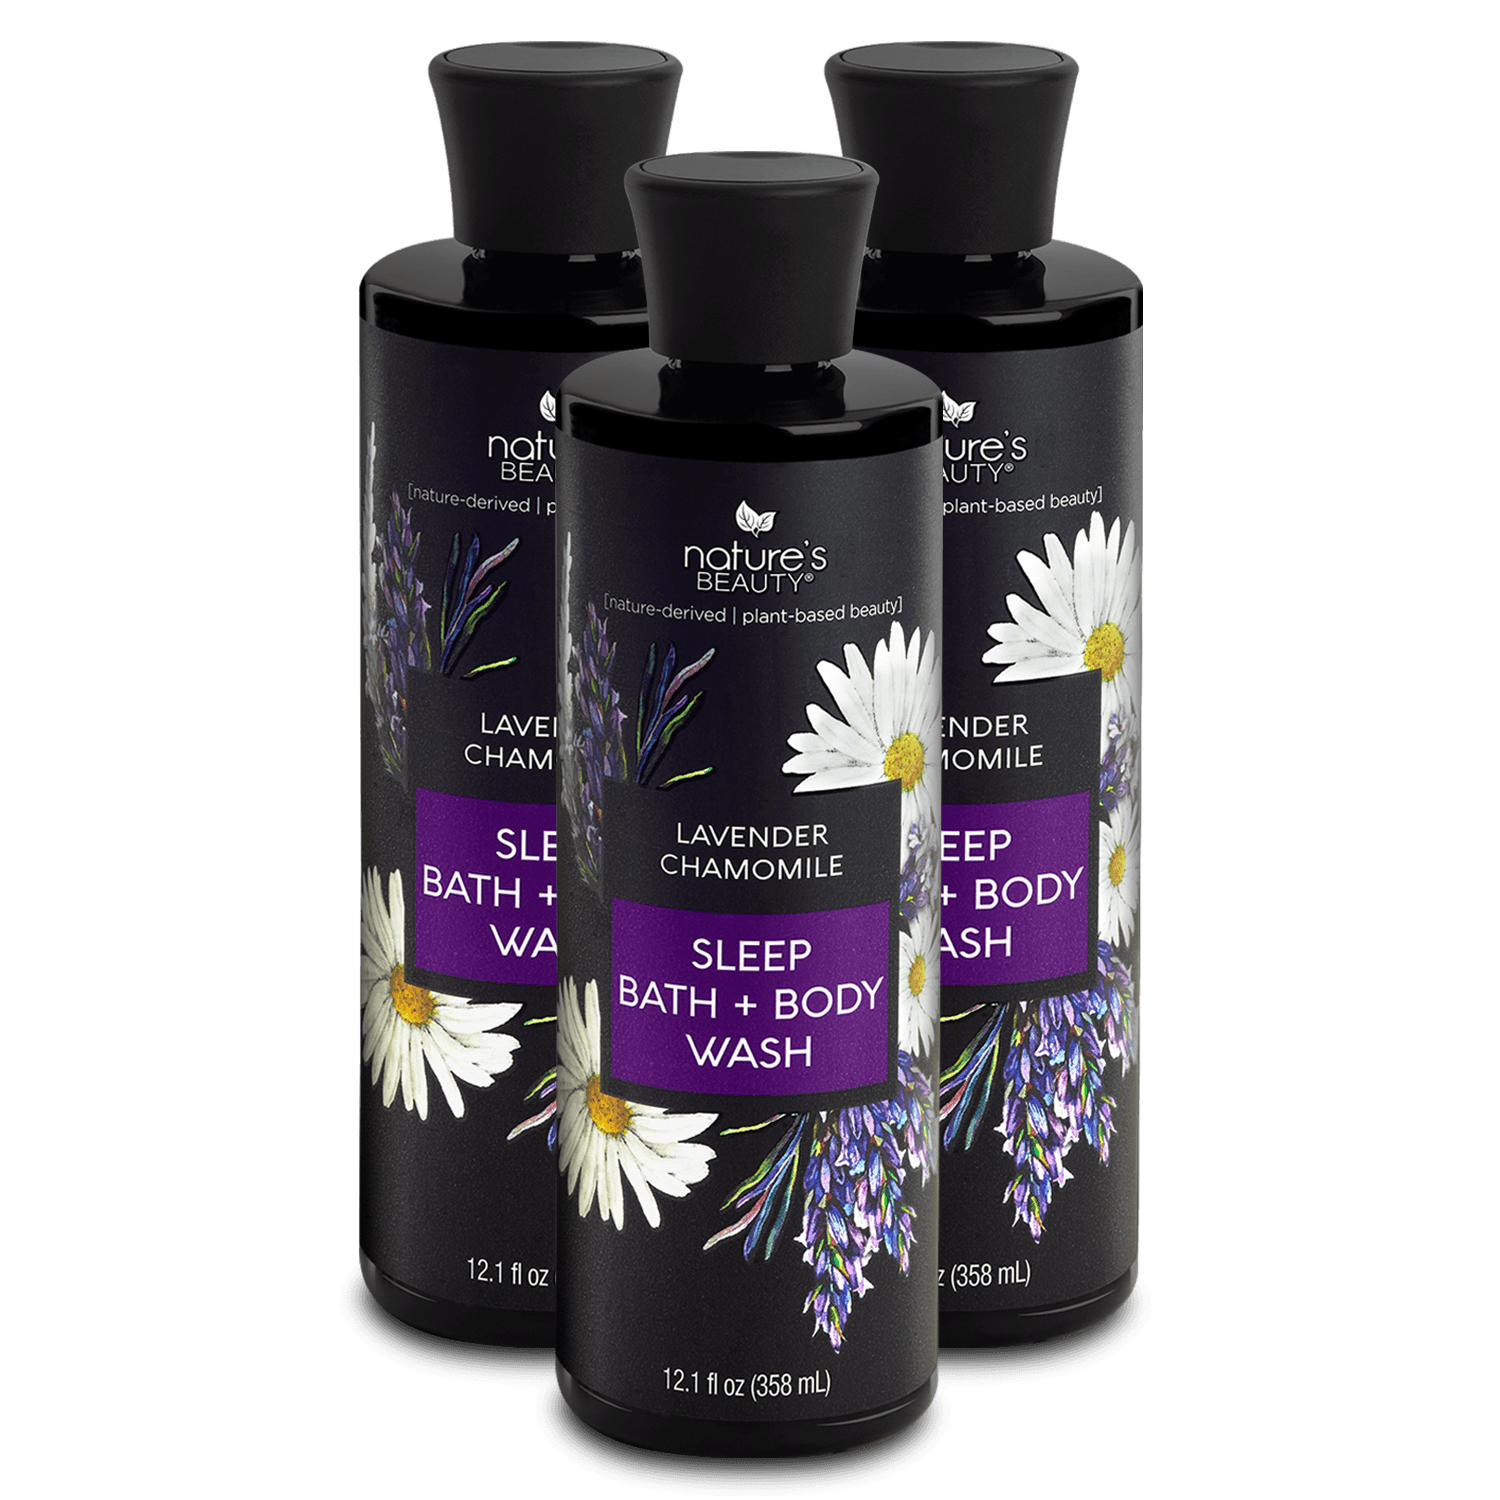 Lavender Chamomile Sleep Bath + Body Wash Nature's Beauty Body Care Buy 2 Get 1 Free 